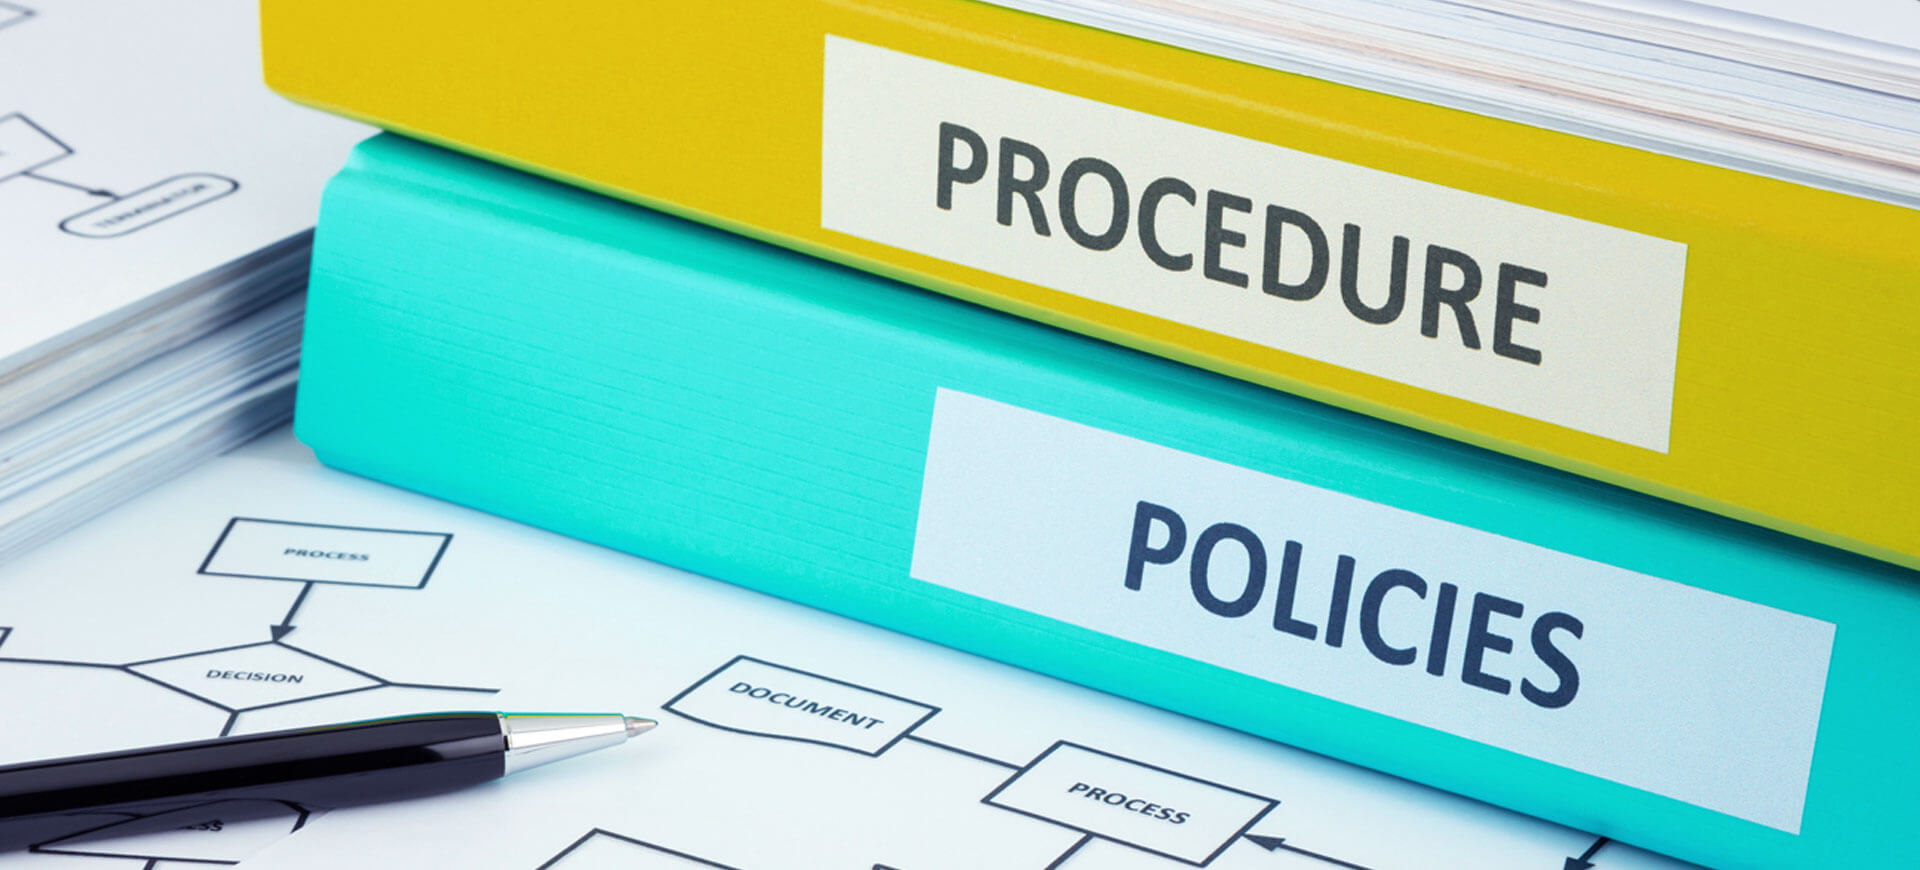 Procedure Manuals and Policies